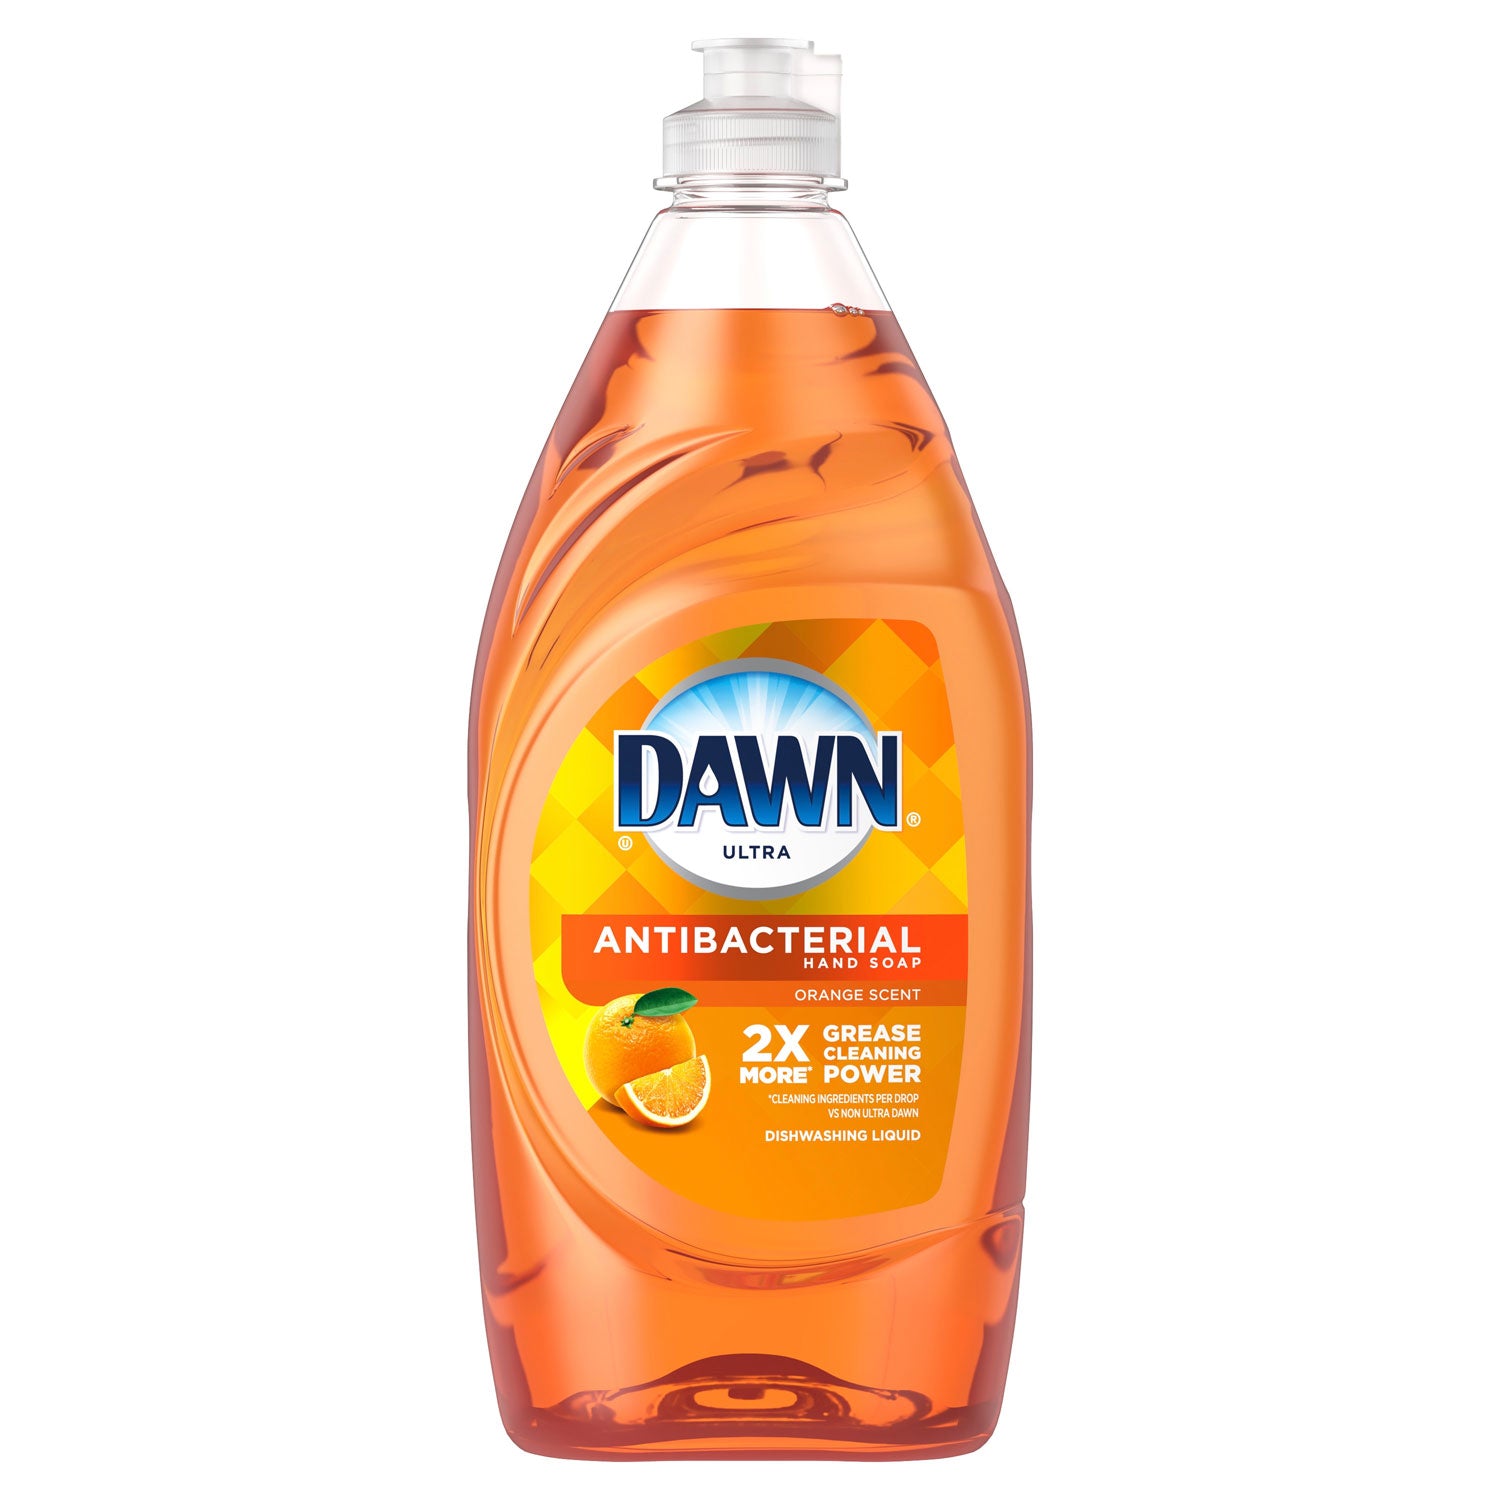 Ultra Antibacterial Dishwashing Liquid, Orange Scent, 28 oz Bottle - 1